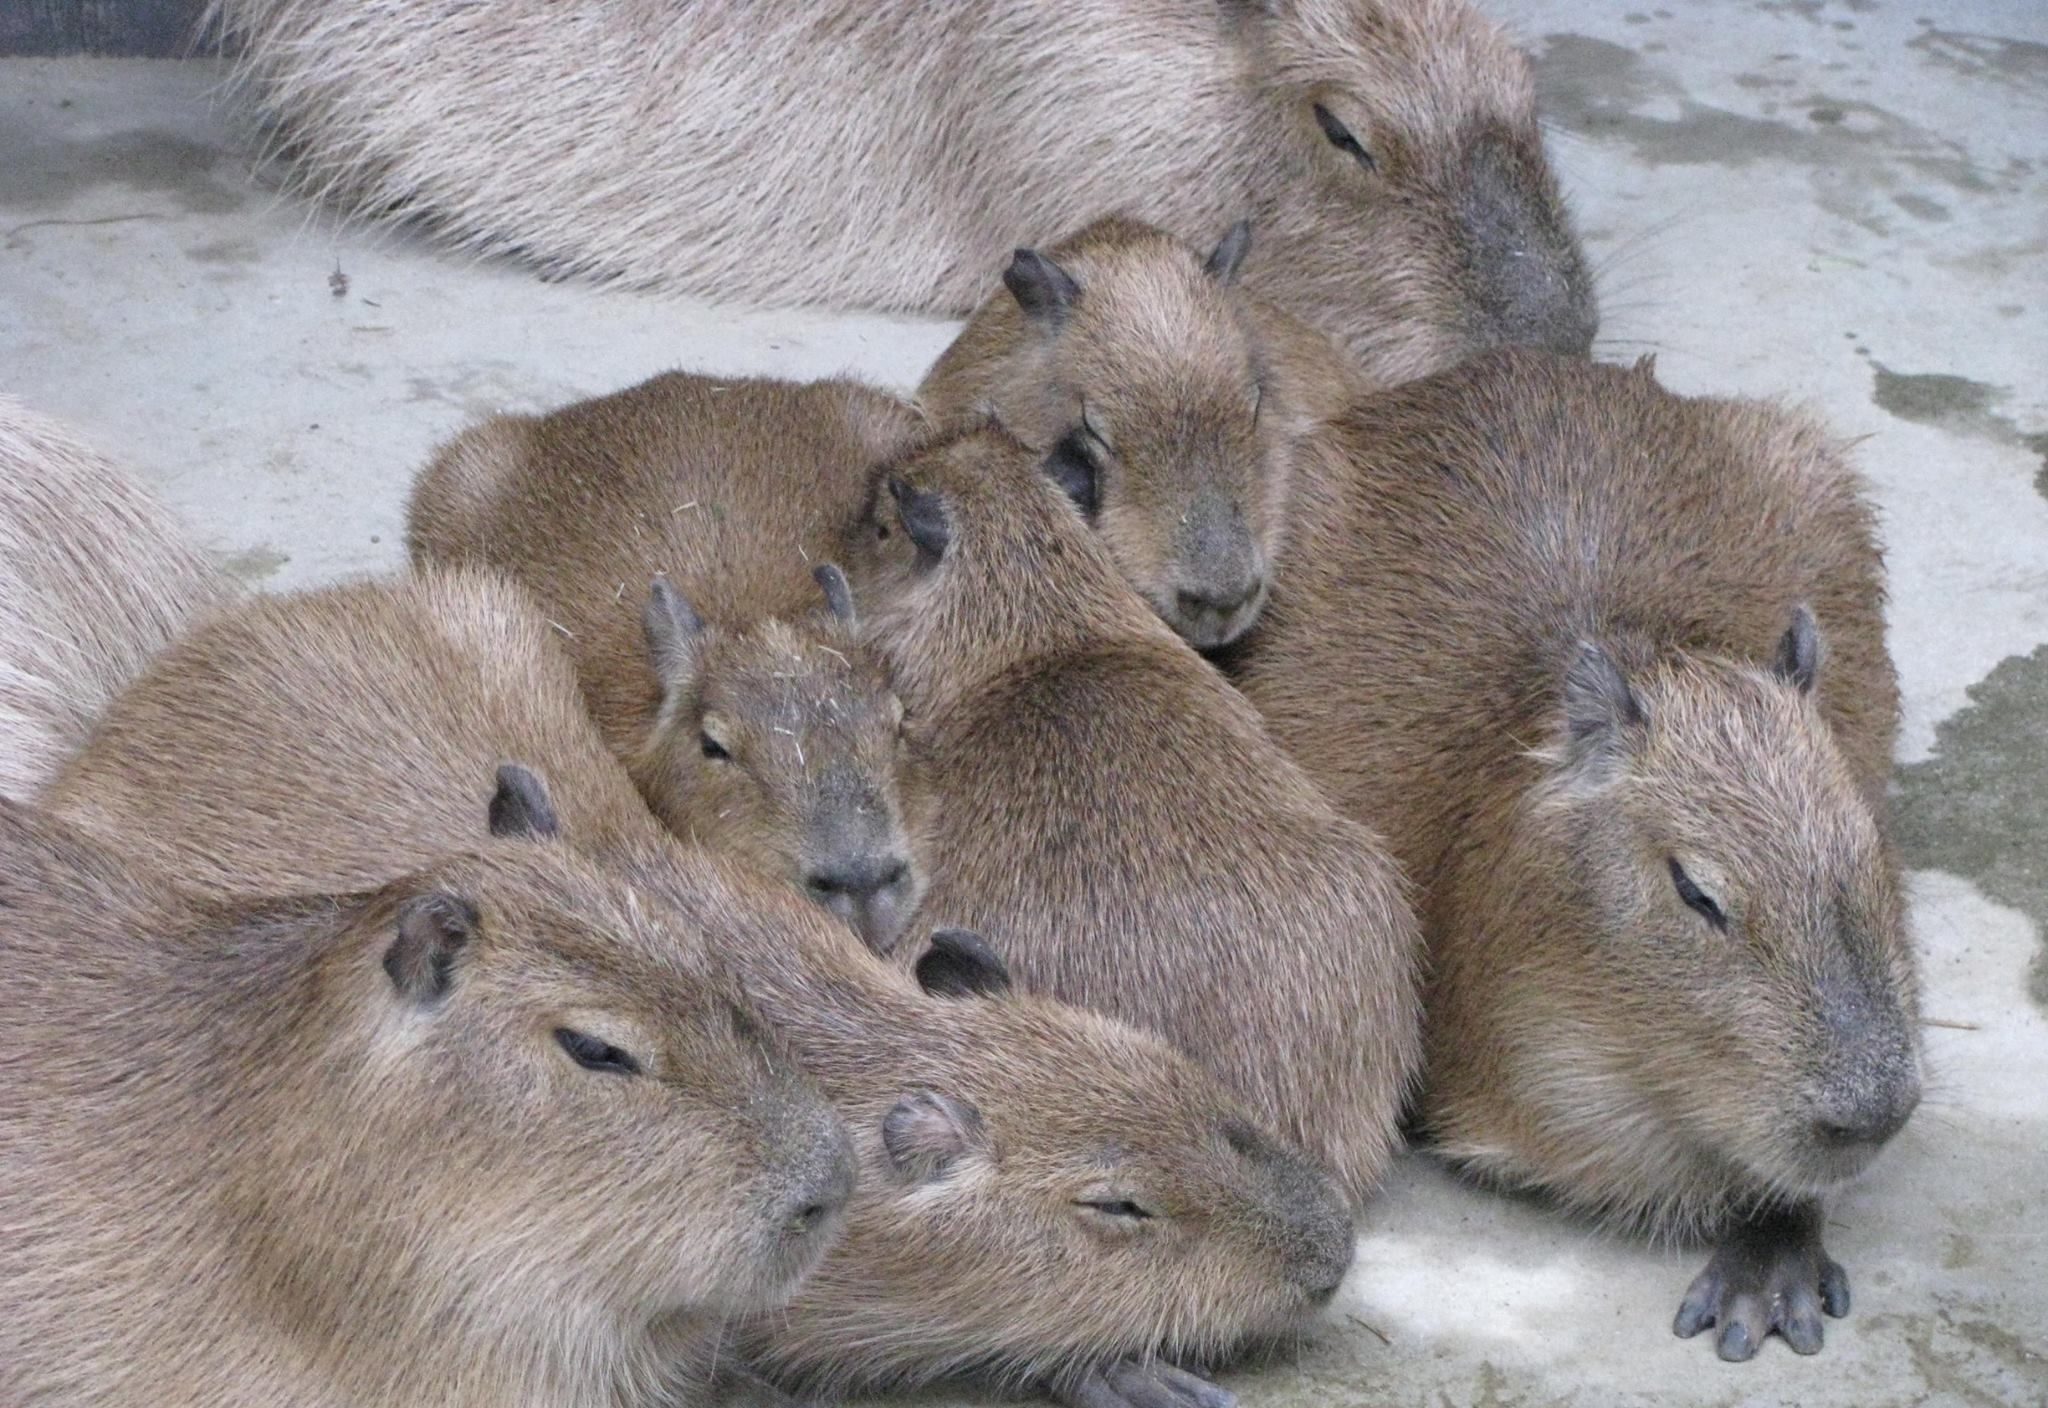 Capybara phone wallpaper, Desktop background, Cute animal pictures, Wholesome content, 2050x1410 HD Desktop